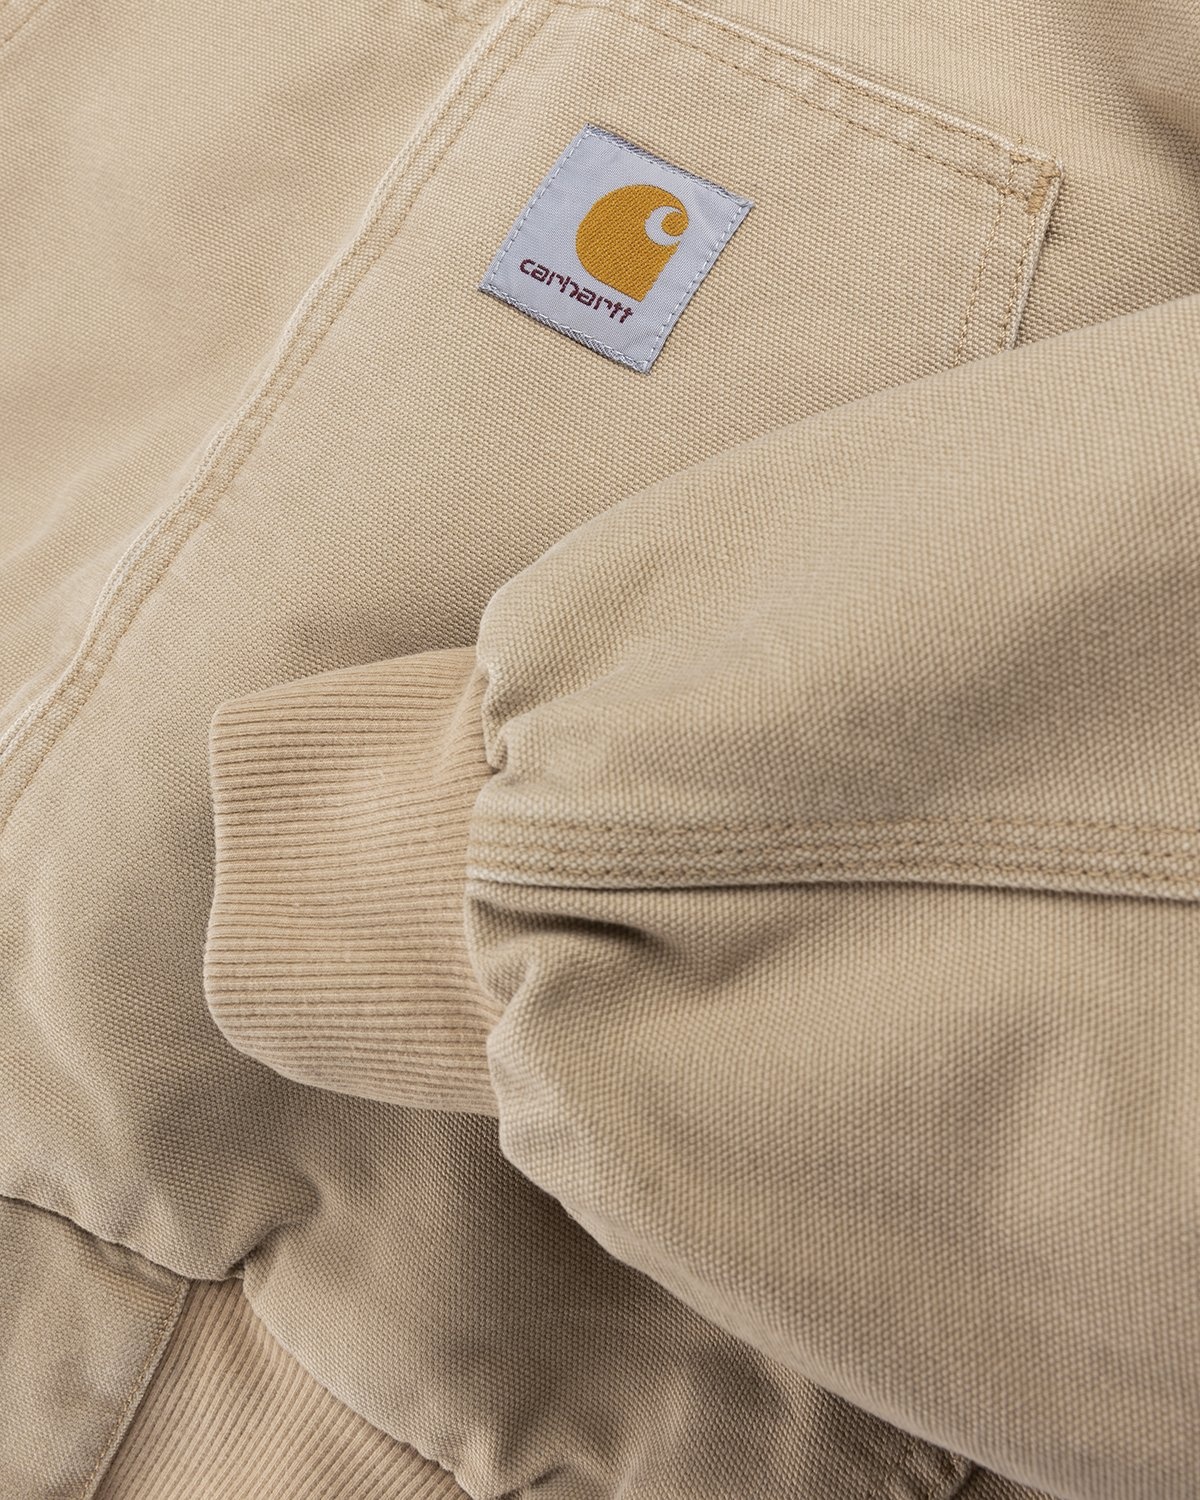 Carhartt WIP – OG Active Jacket Brown - Outerwear - Brown - Image 5